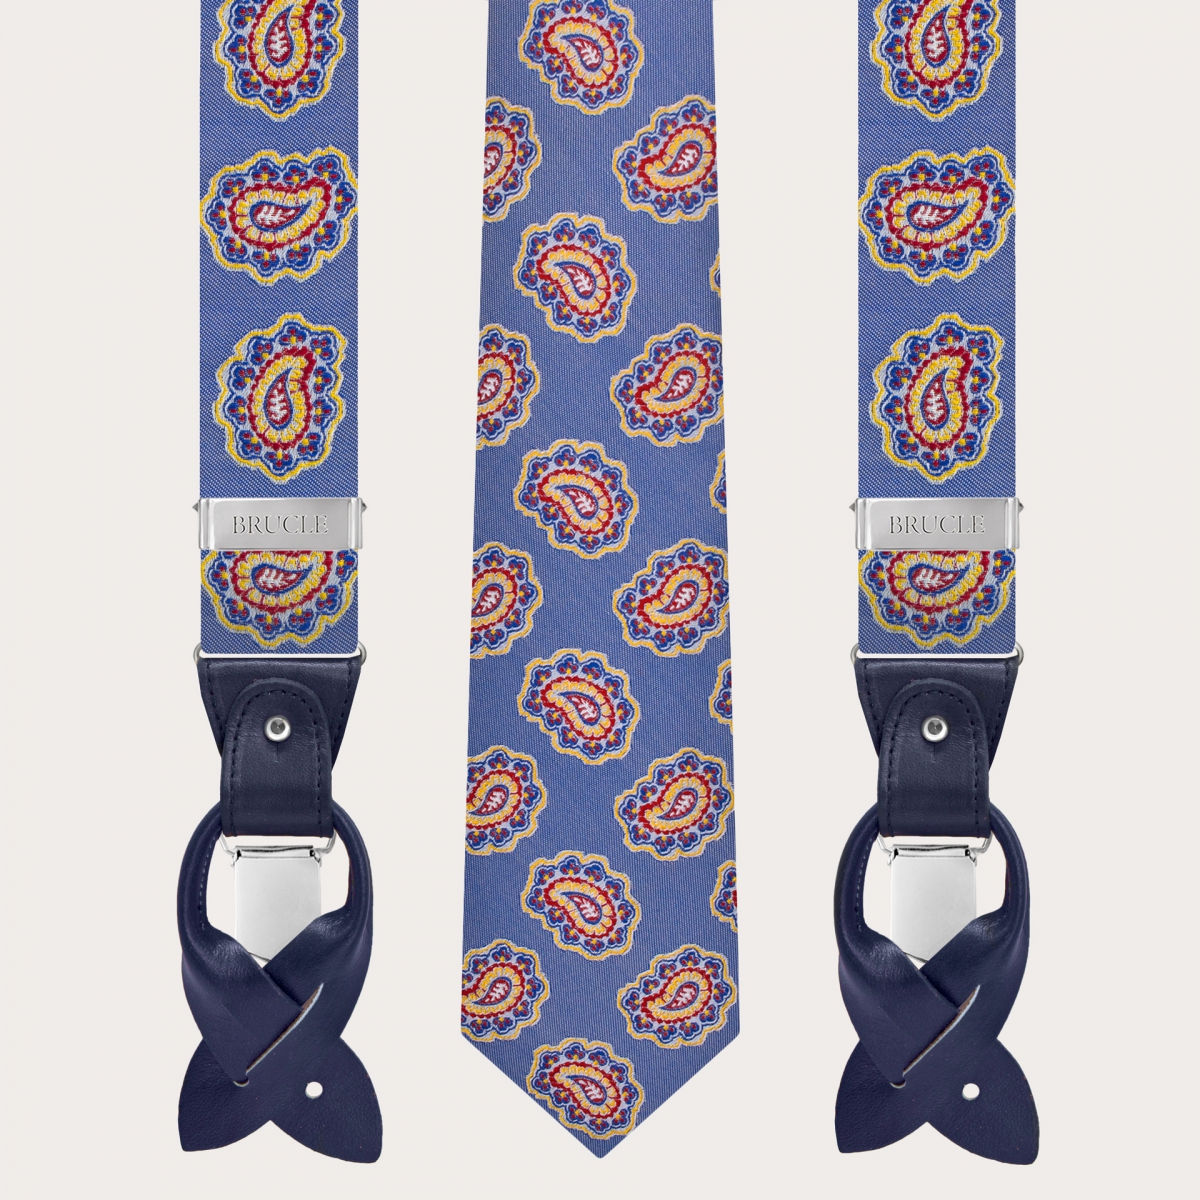 Bretelle e cravatta coordinate in seta, fantasia macro paisley blue